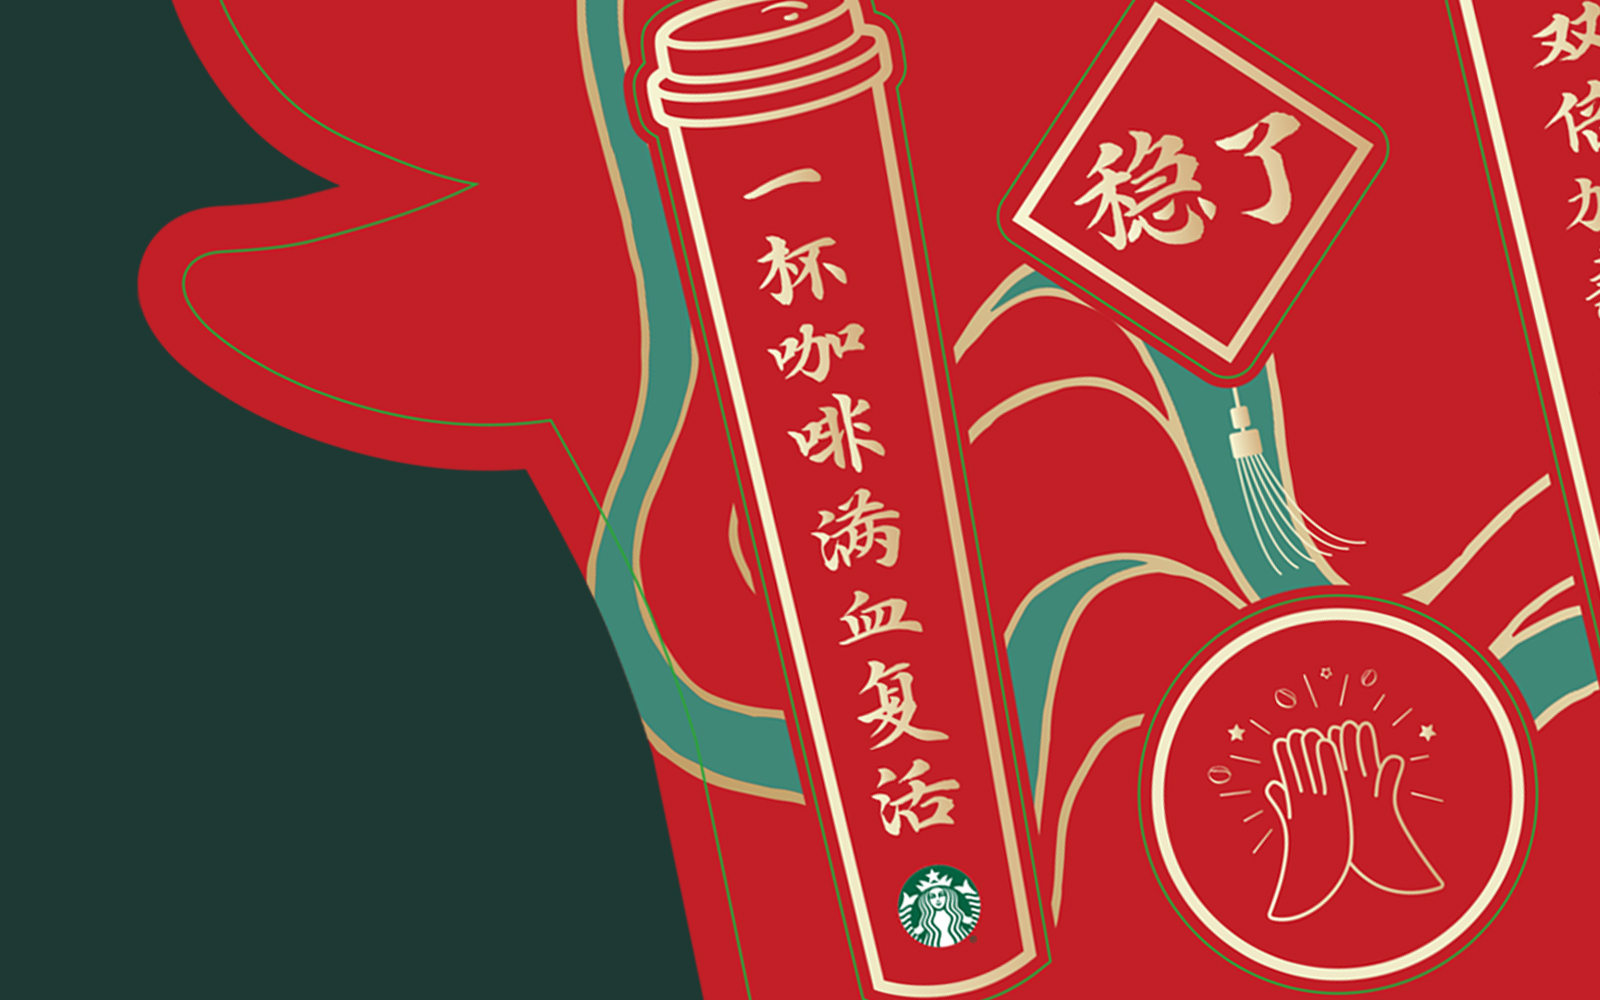 Font design incorporating Starbucks theme elements